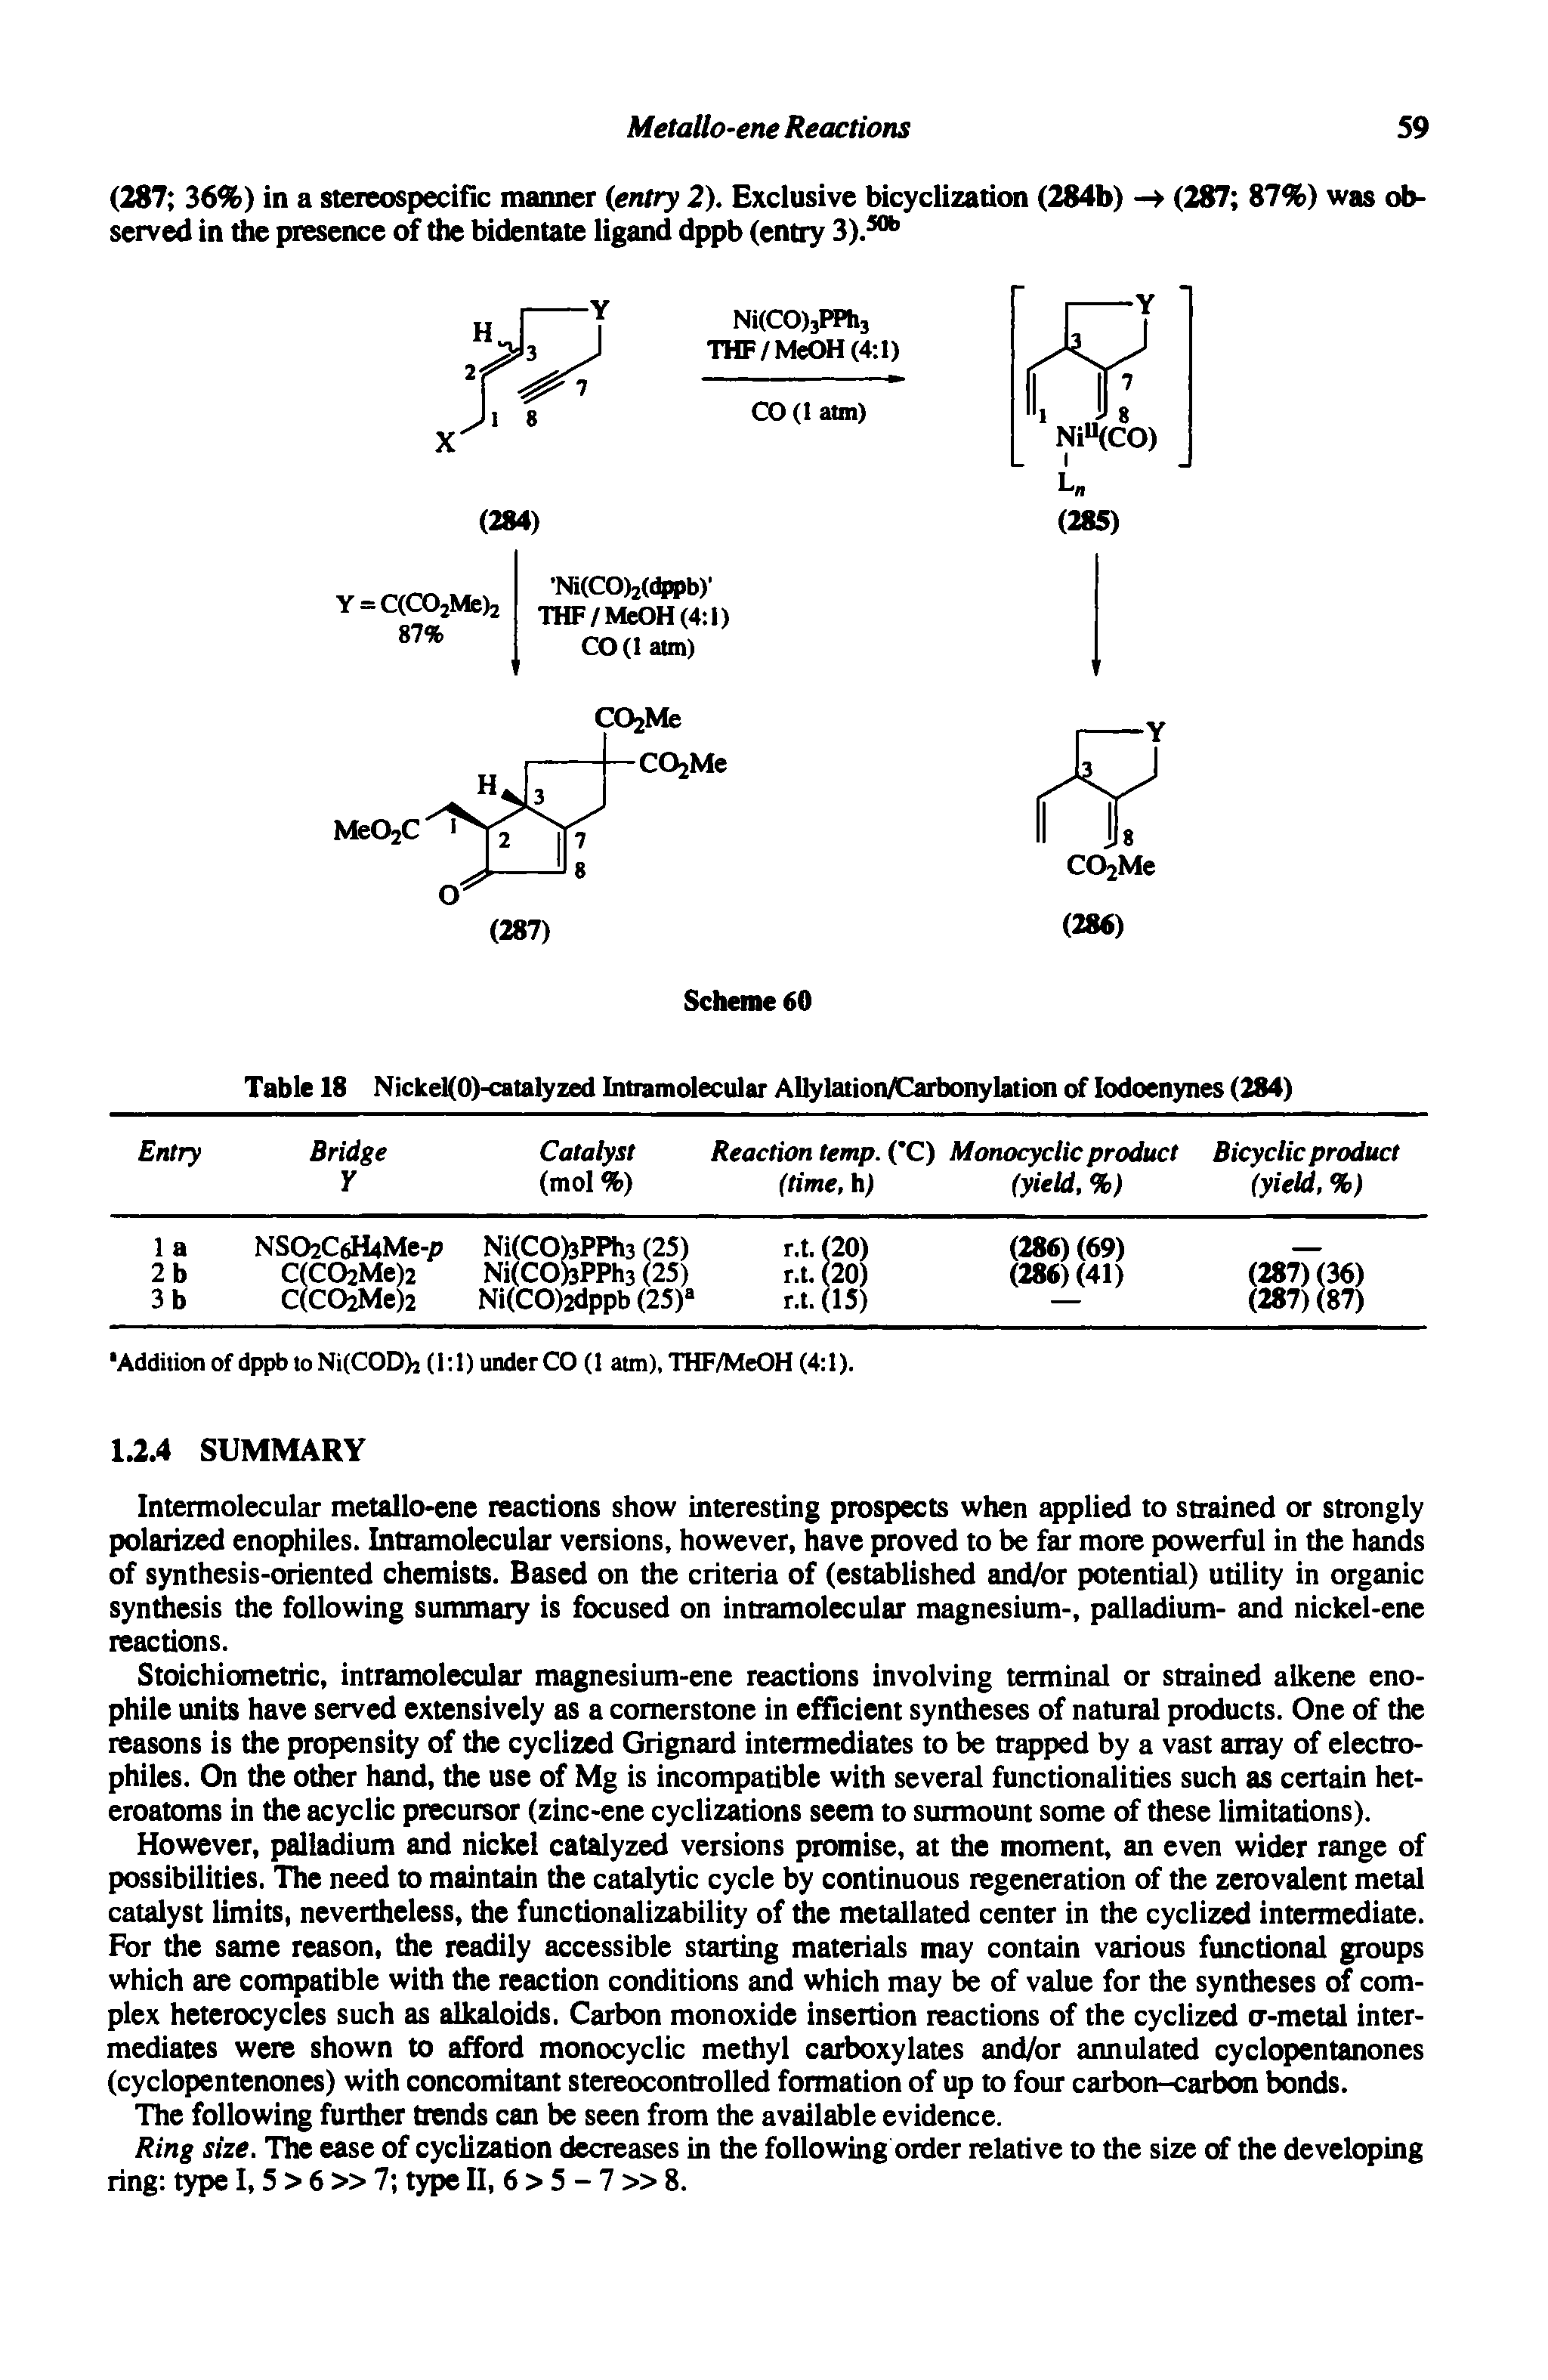 Table 18 NickeKO)-catalyzed Intramolecular AllylatiotiAI arbonylation of lodoenynes (284)...